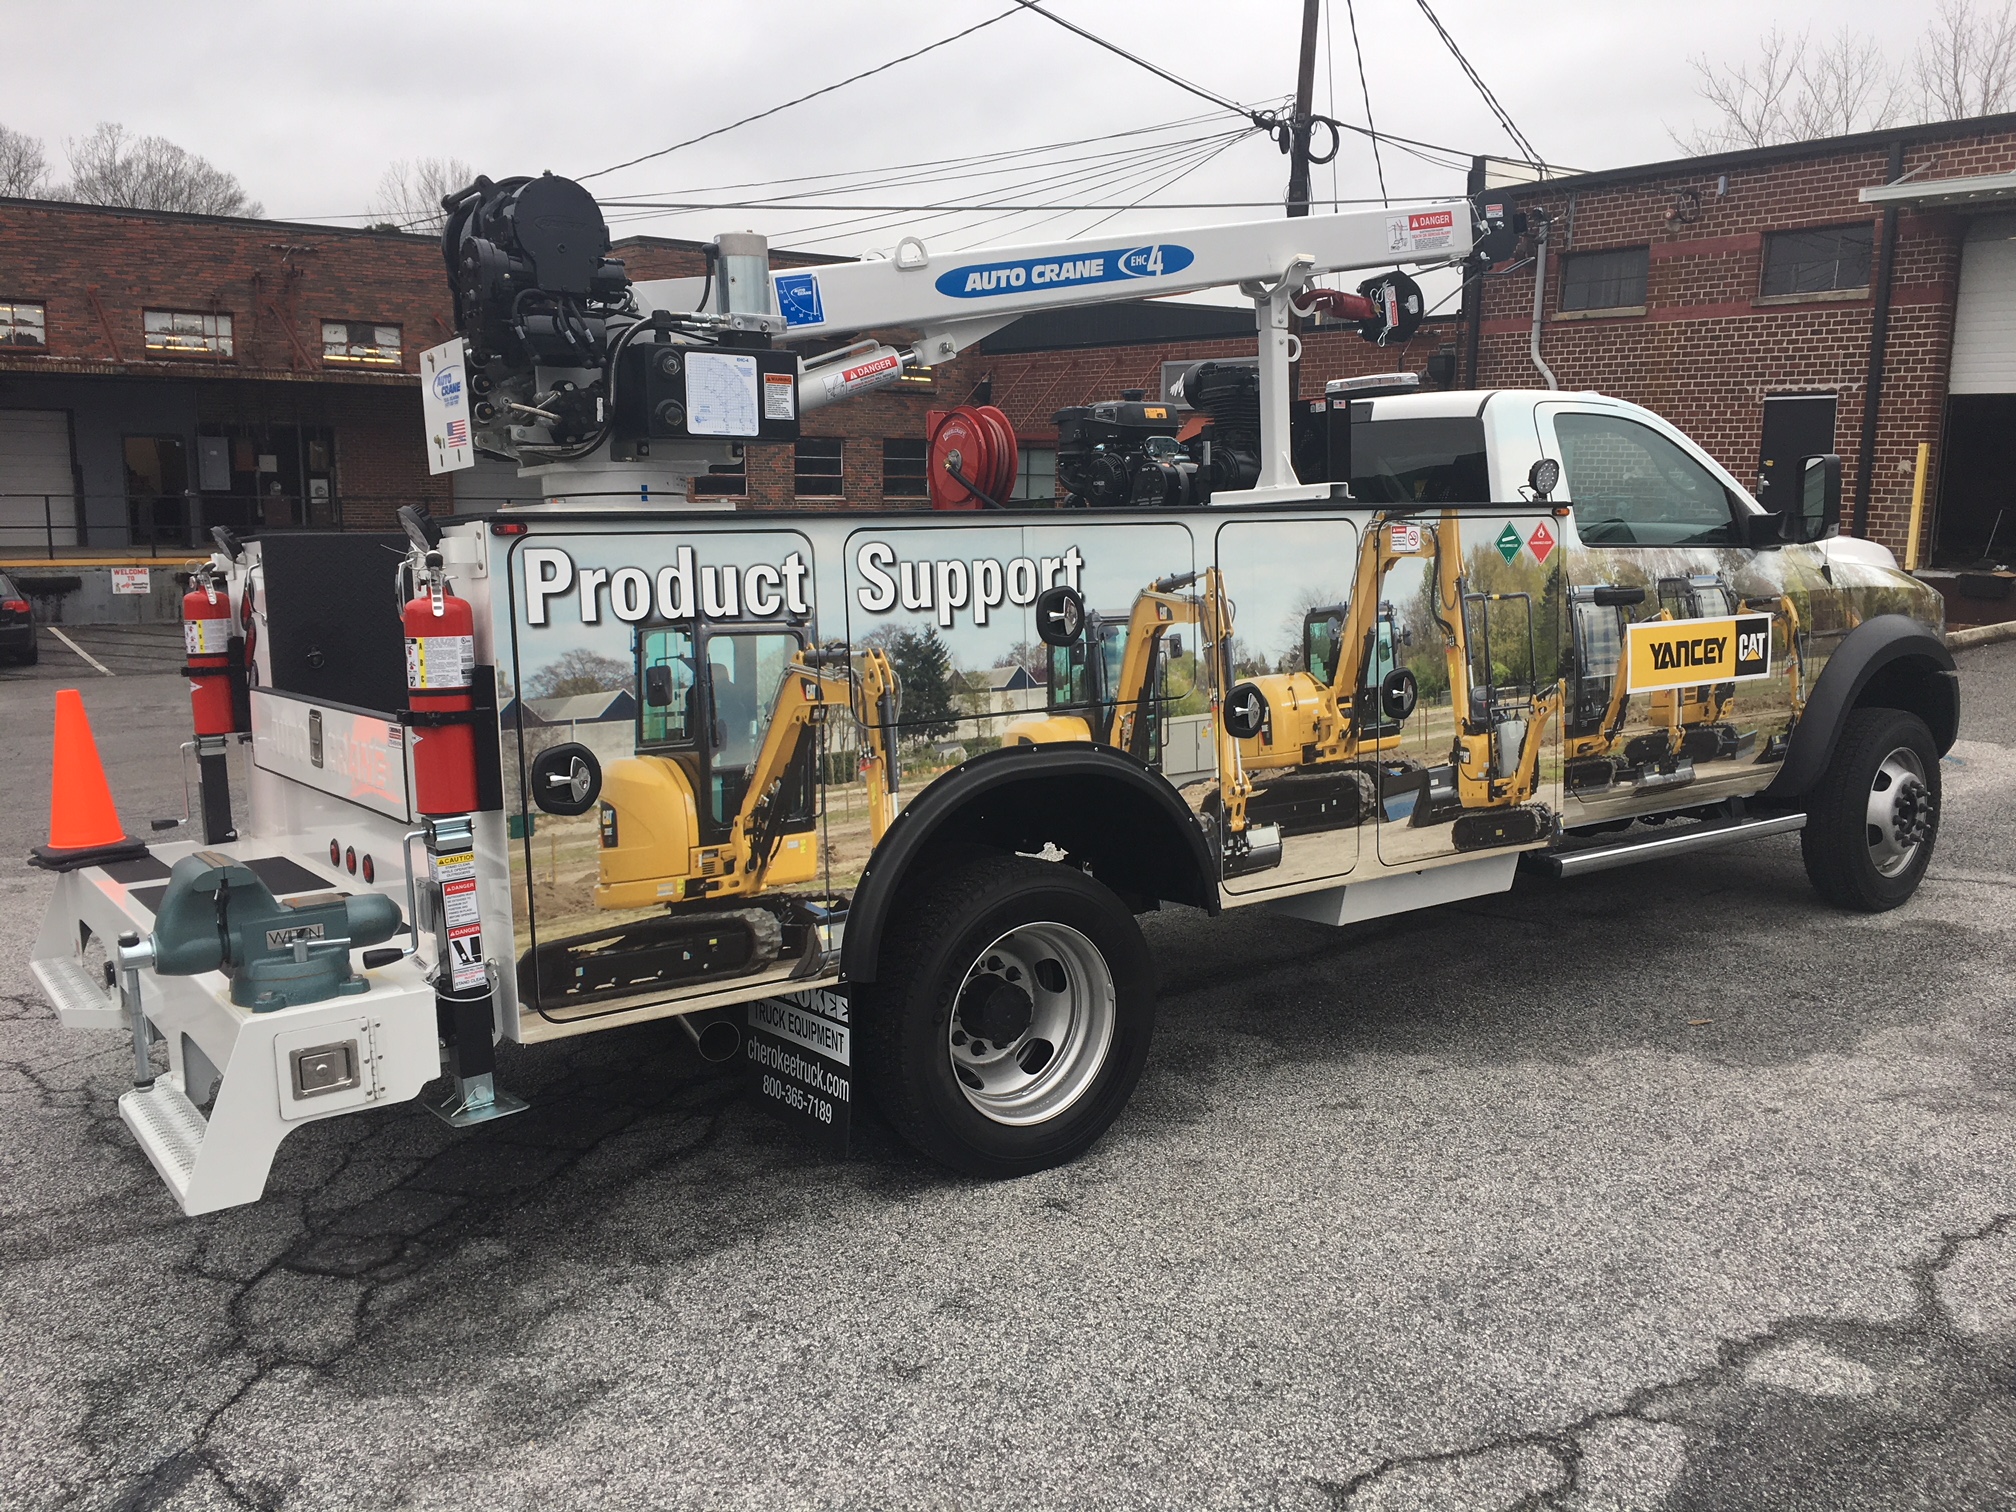 Yancey Cat Product Support truck fleet wrap 